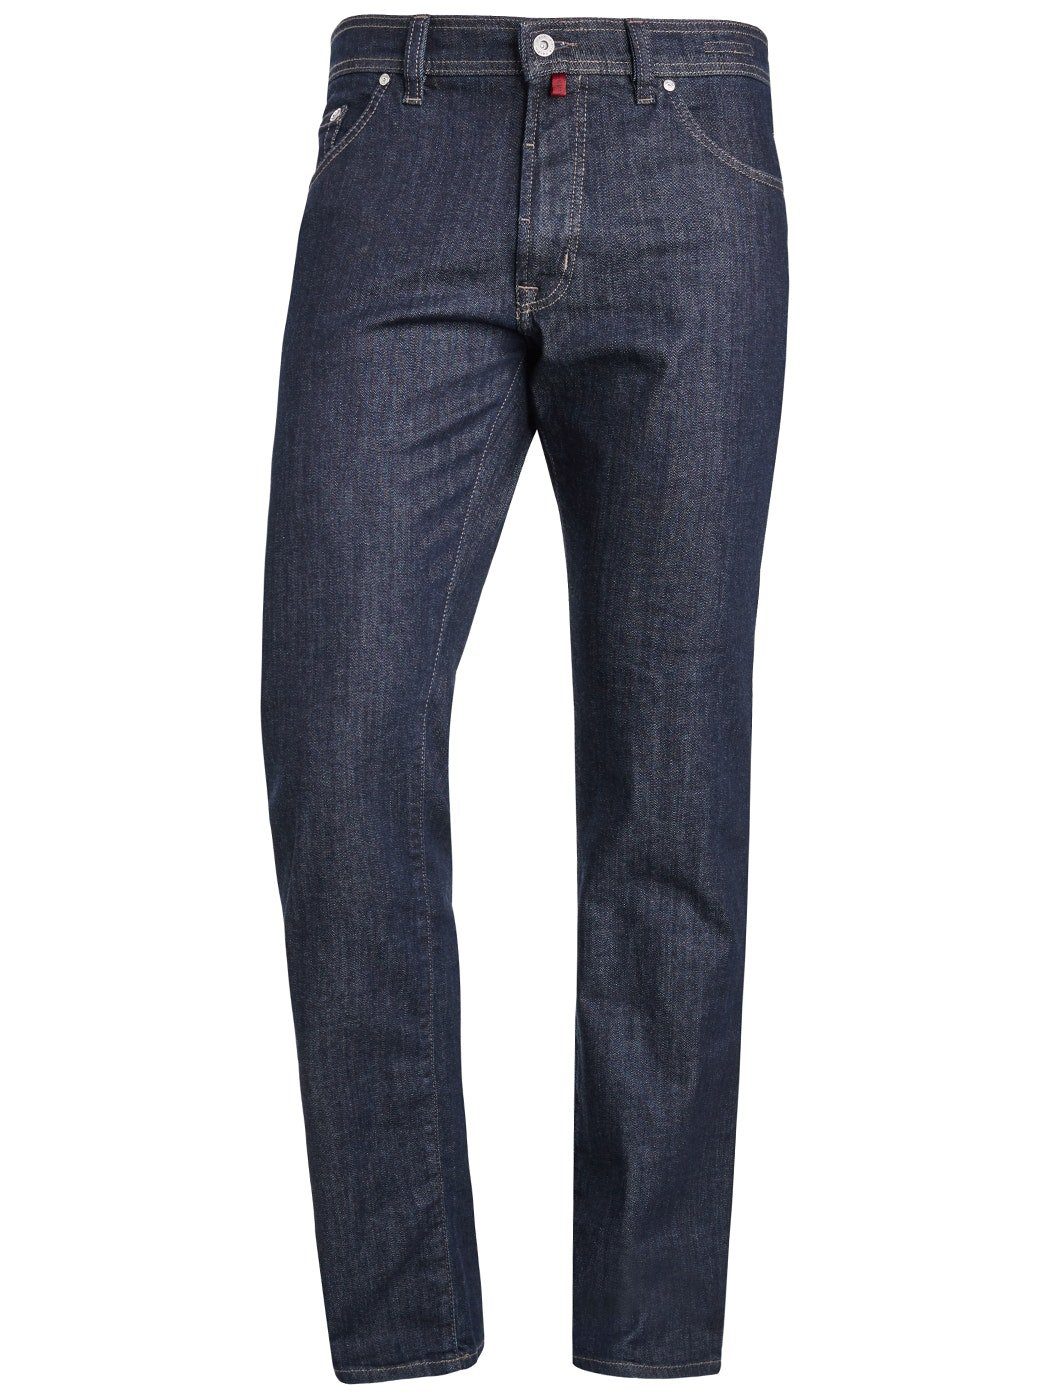 Pierre Cardin 5-Pocket-Jeans PIERRE CARDIN DEAUVILLE dark indigo rinse 3496 7010.01 - THERMO